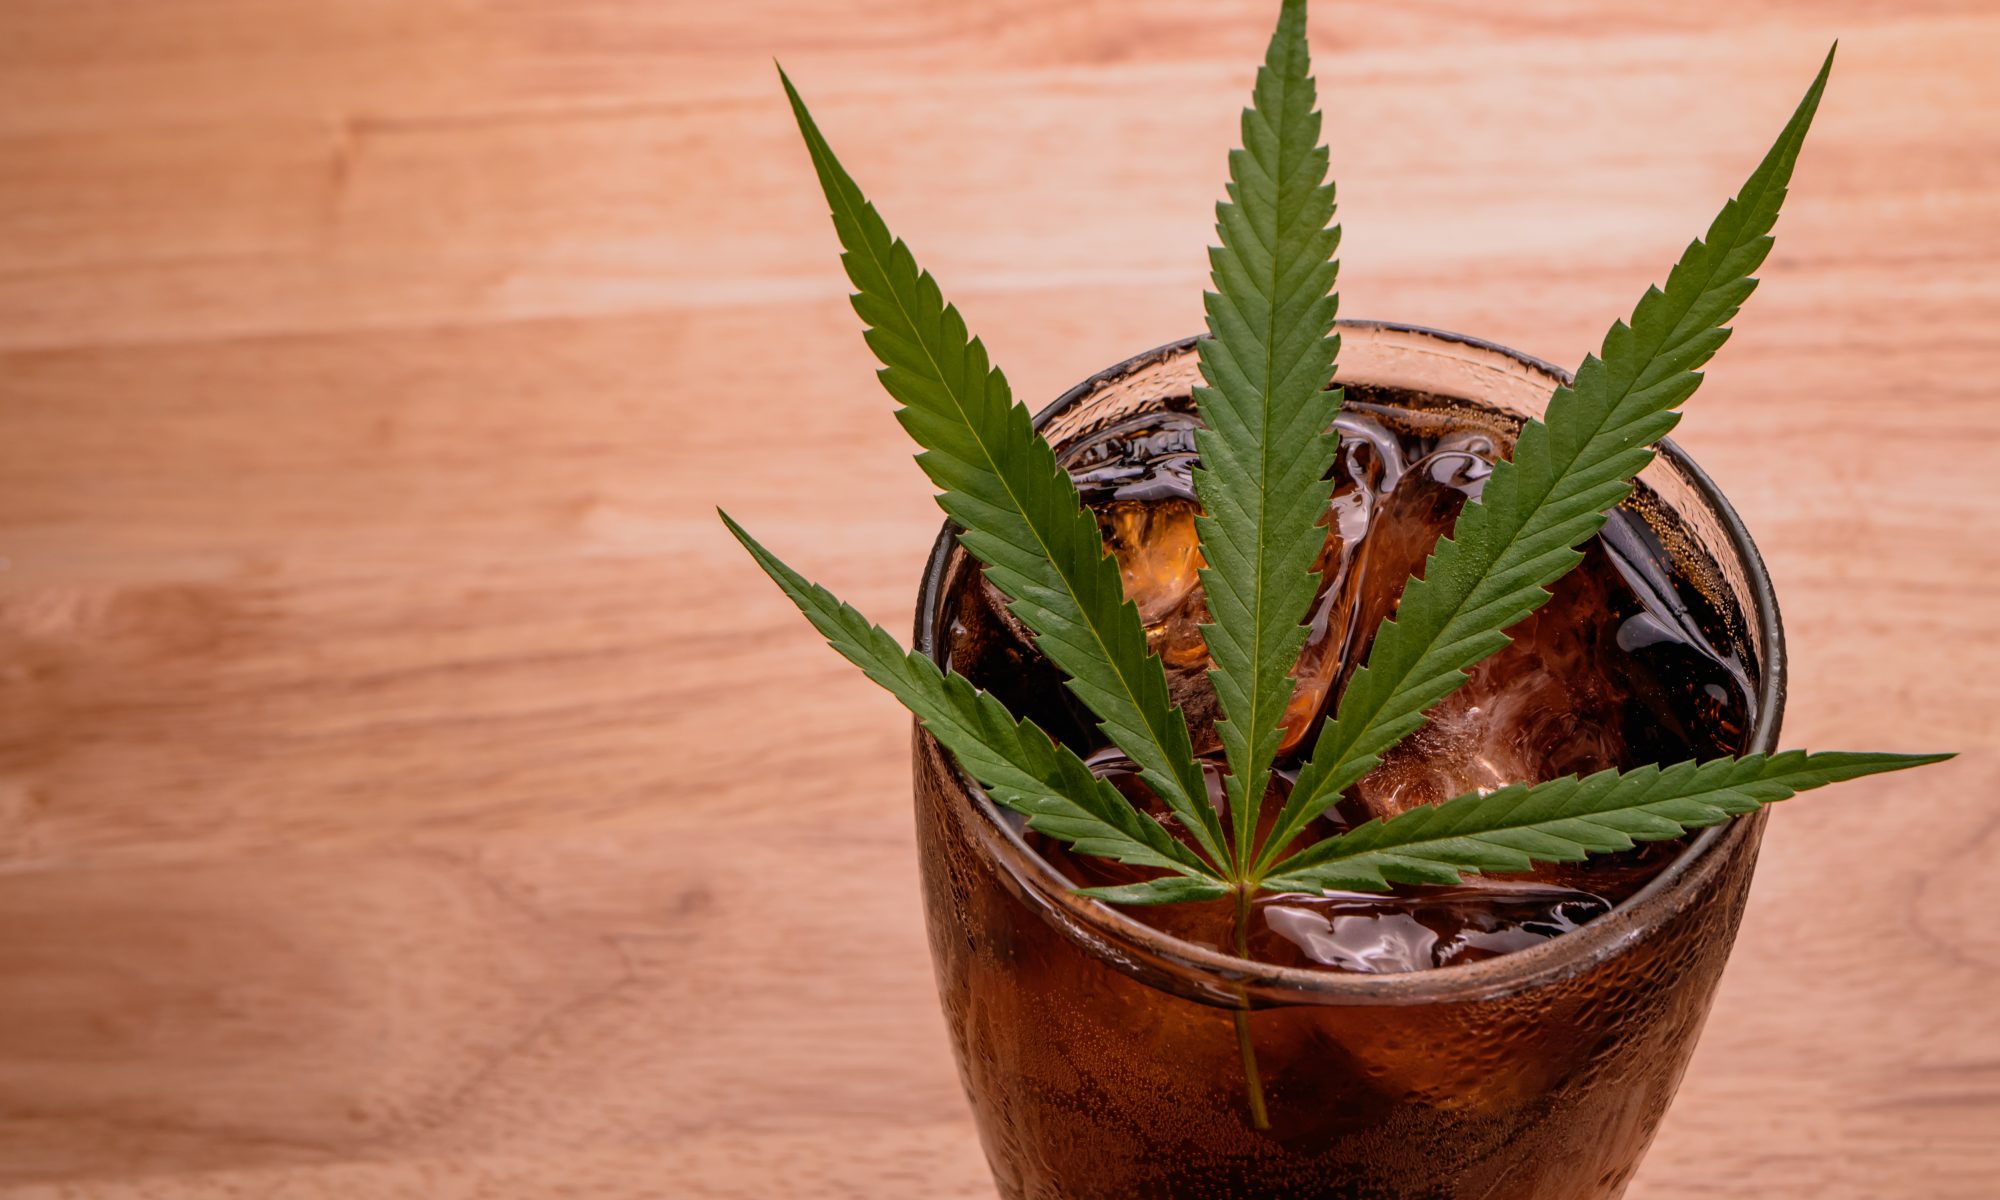 Chronic Therapy showcasing their cannabis soda drinks Colorado